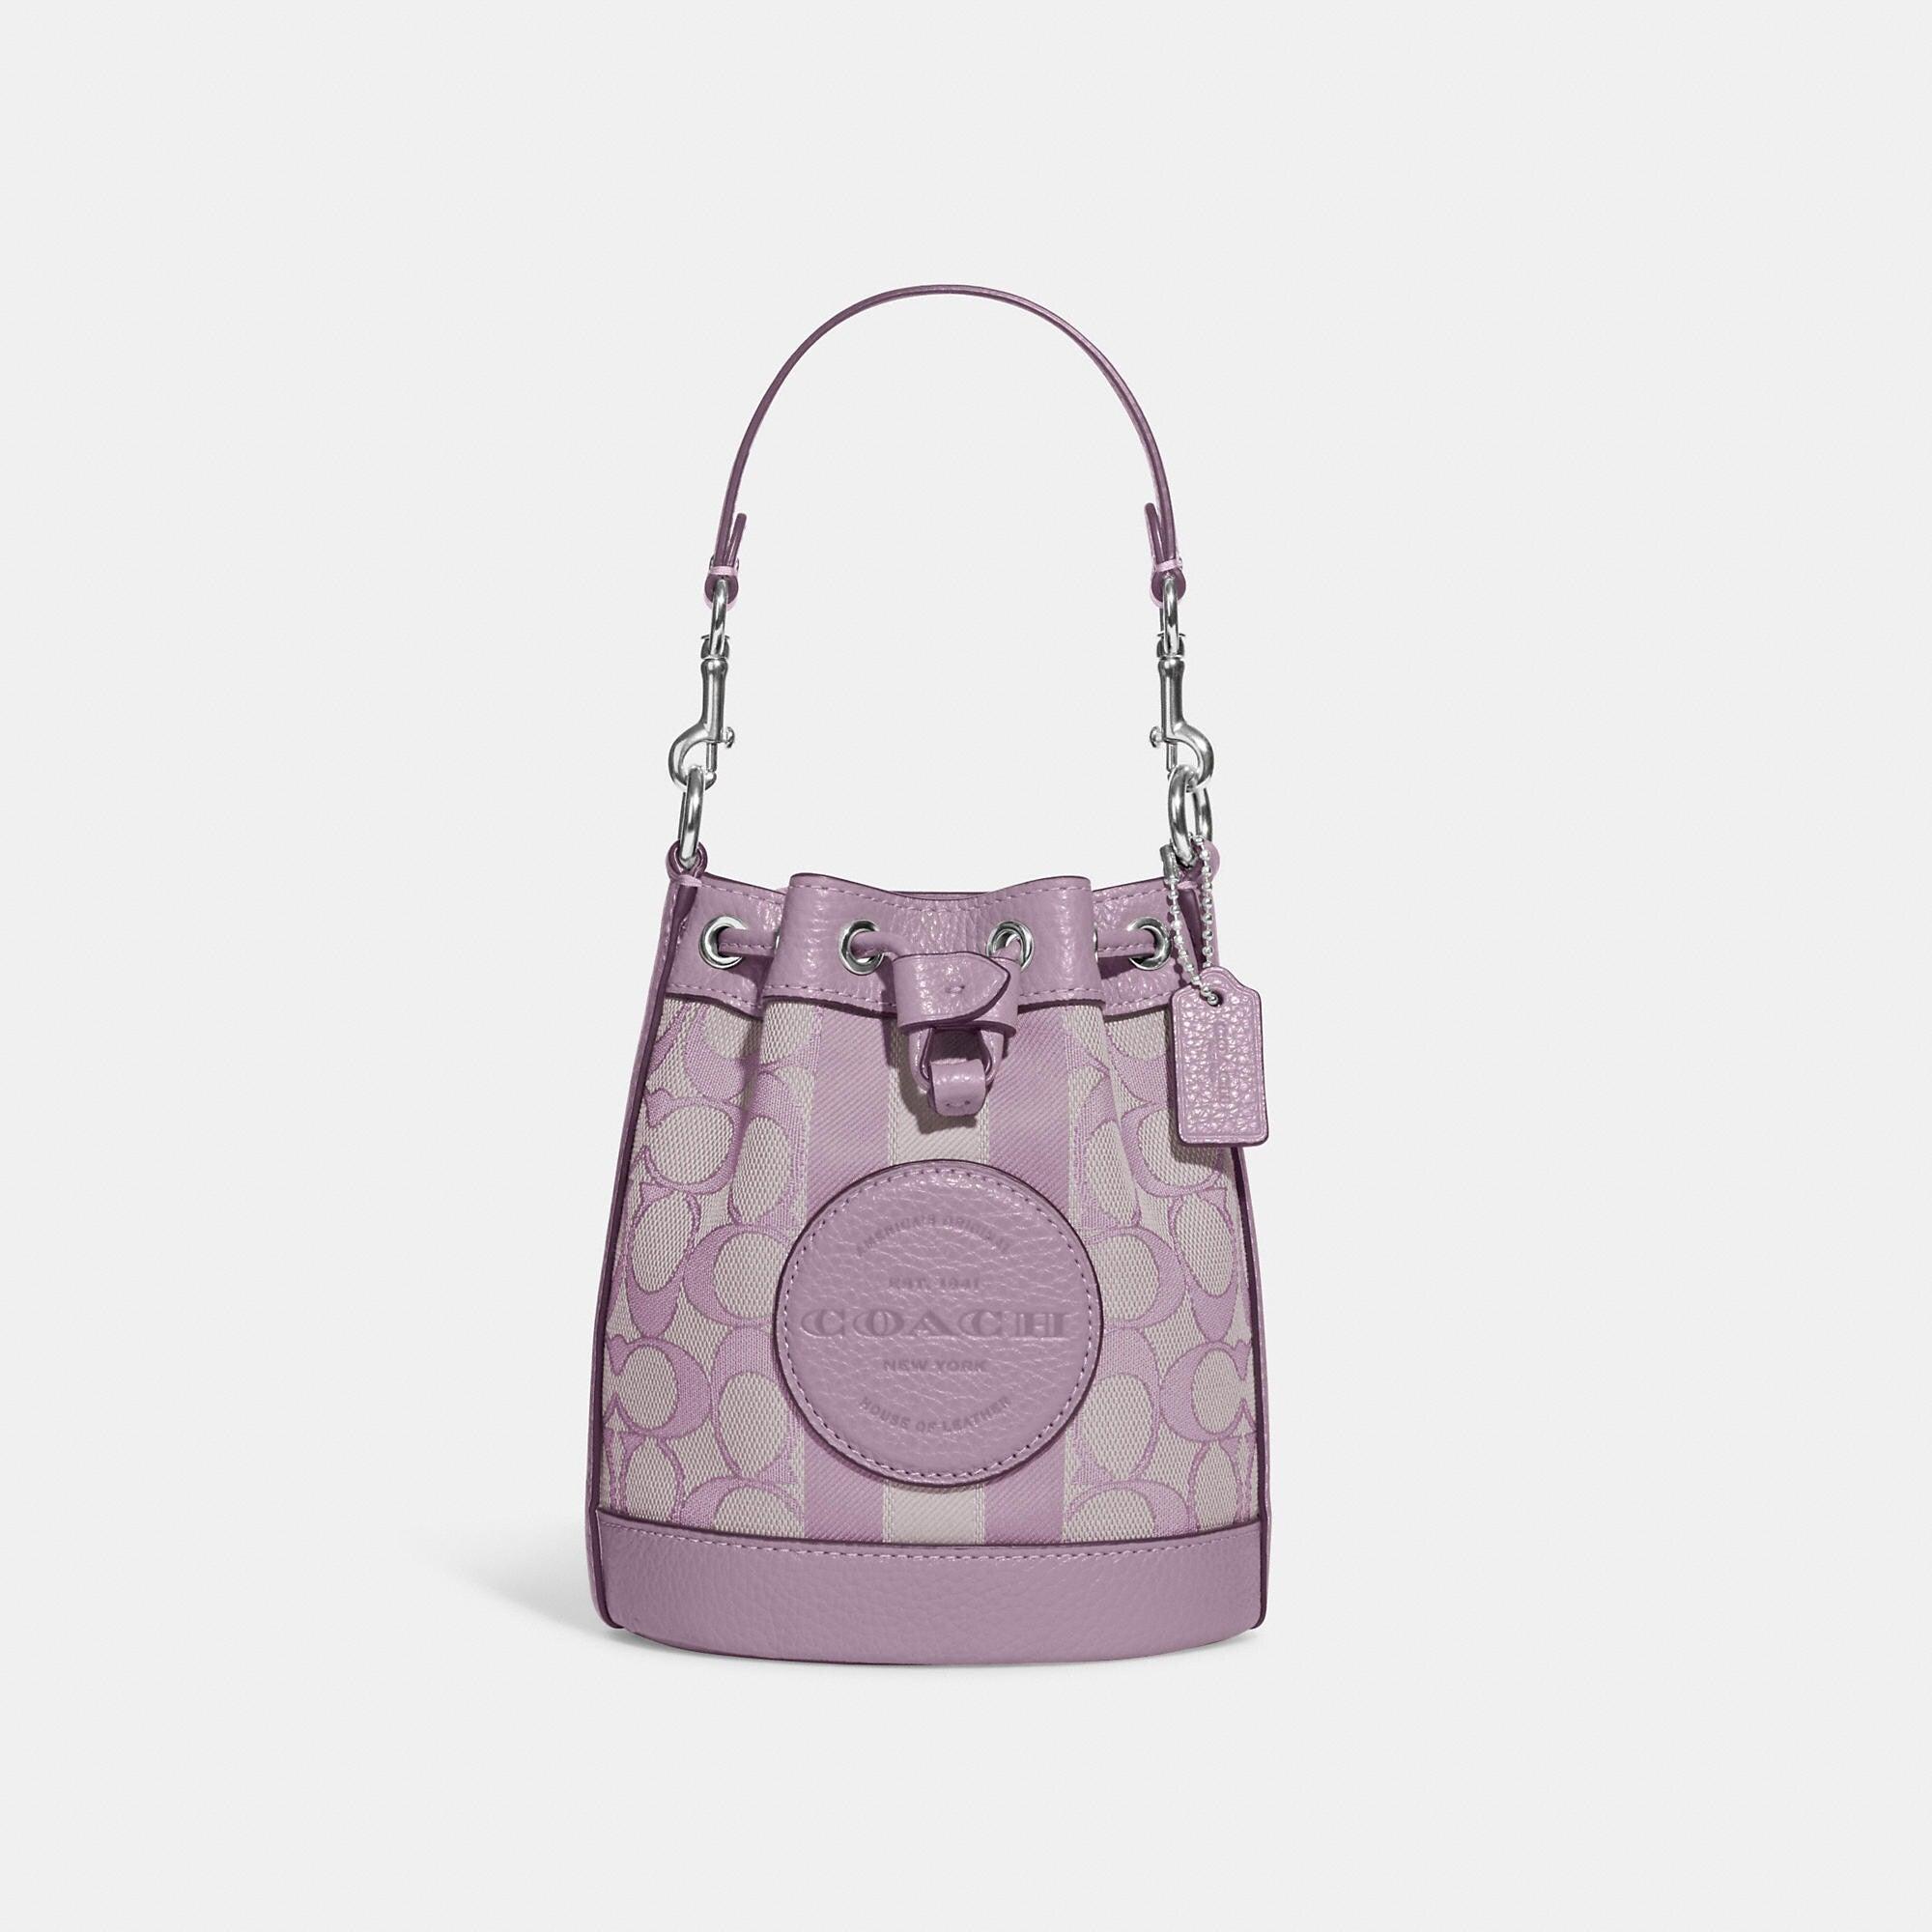 Auth Coach bag outlet COACH tote Ashley leather satchel 15445 BK | eBay